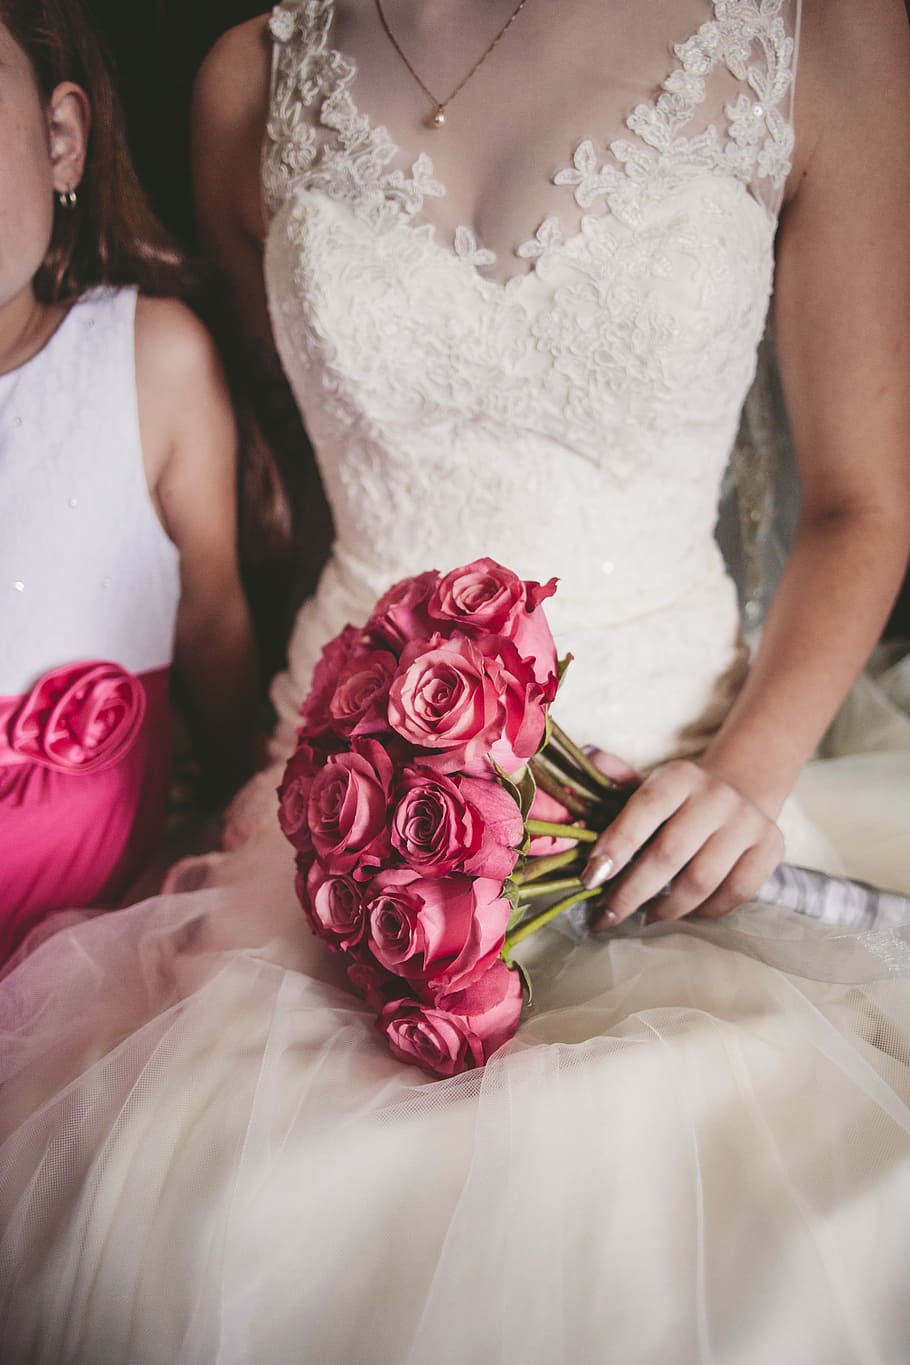 woman wearing white floral wedding dress holding bouquet of rose, woman holding a bouquet of pink roses